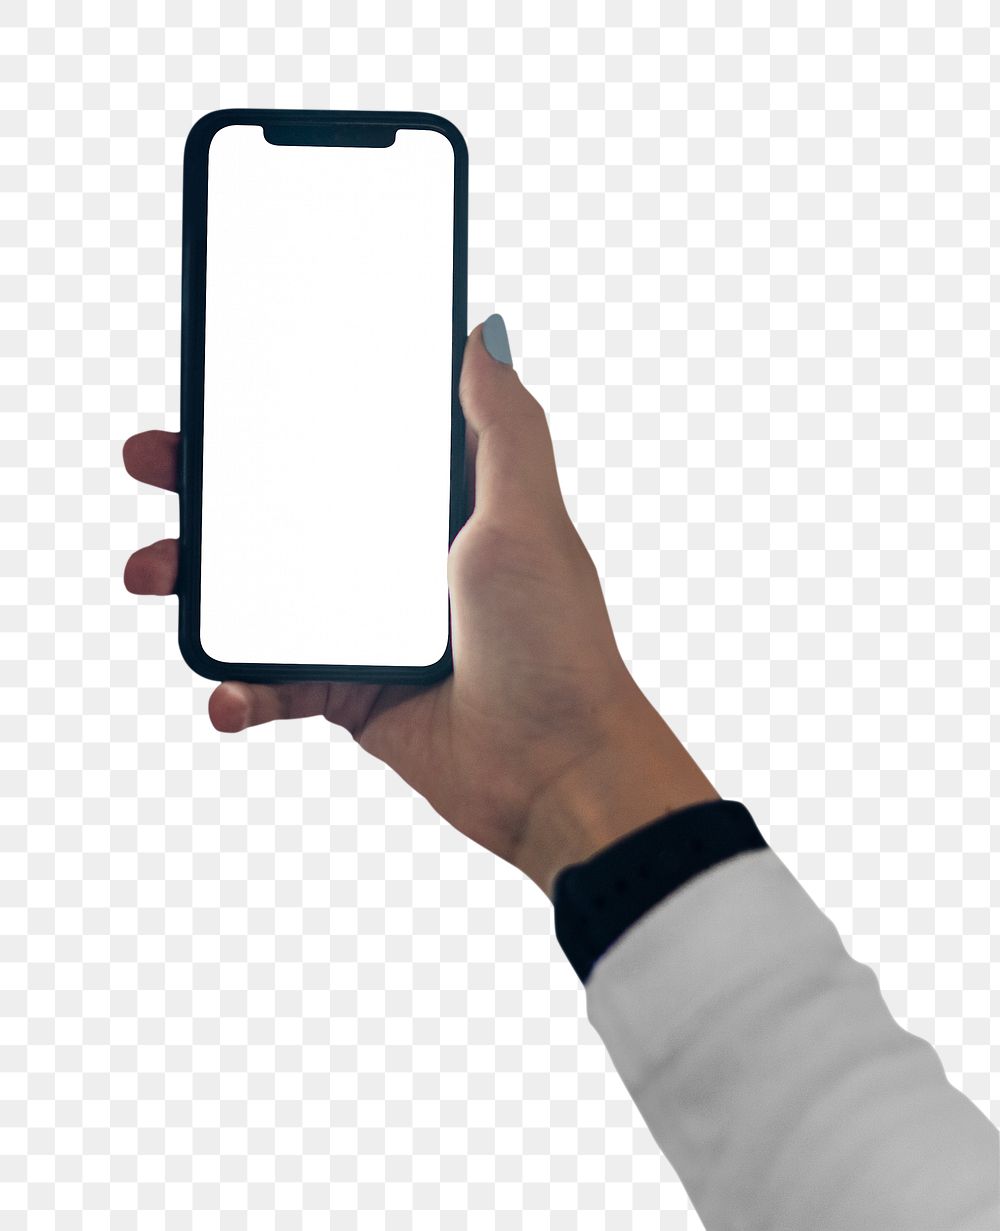 Smartphone screen mockup png on transparent background